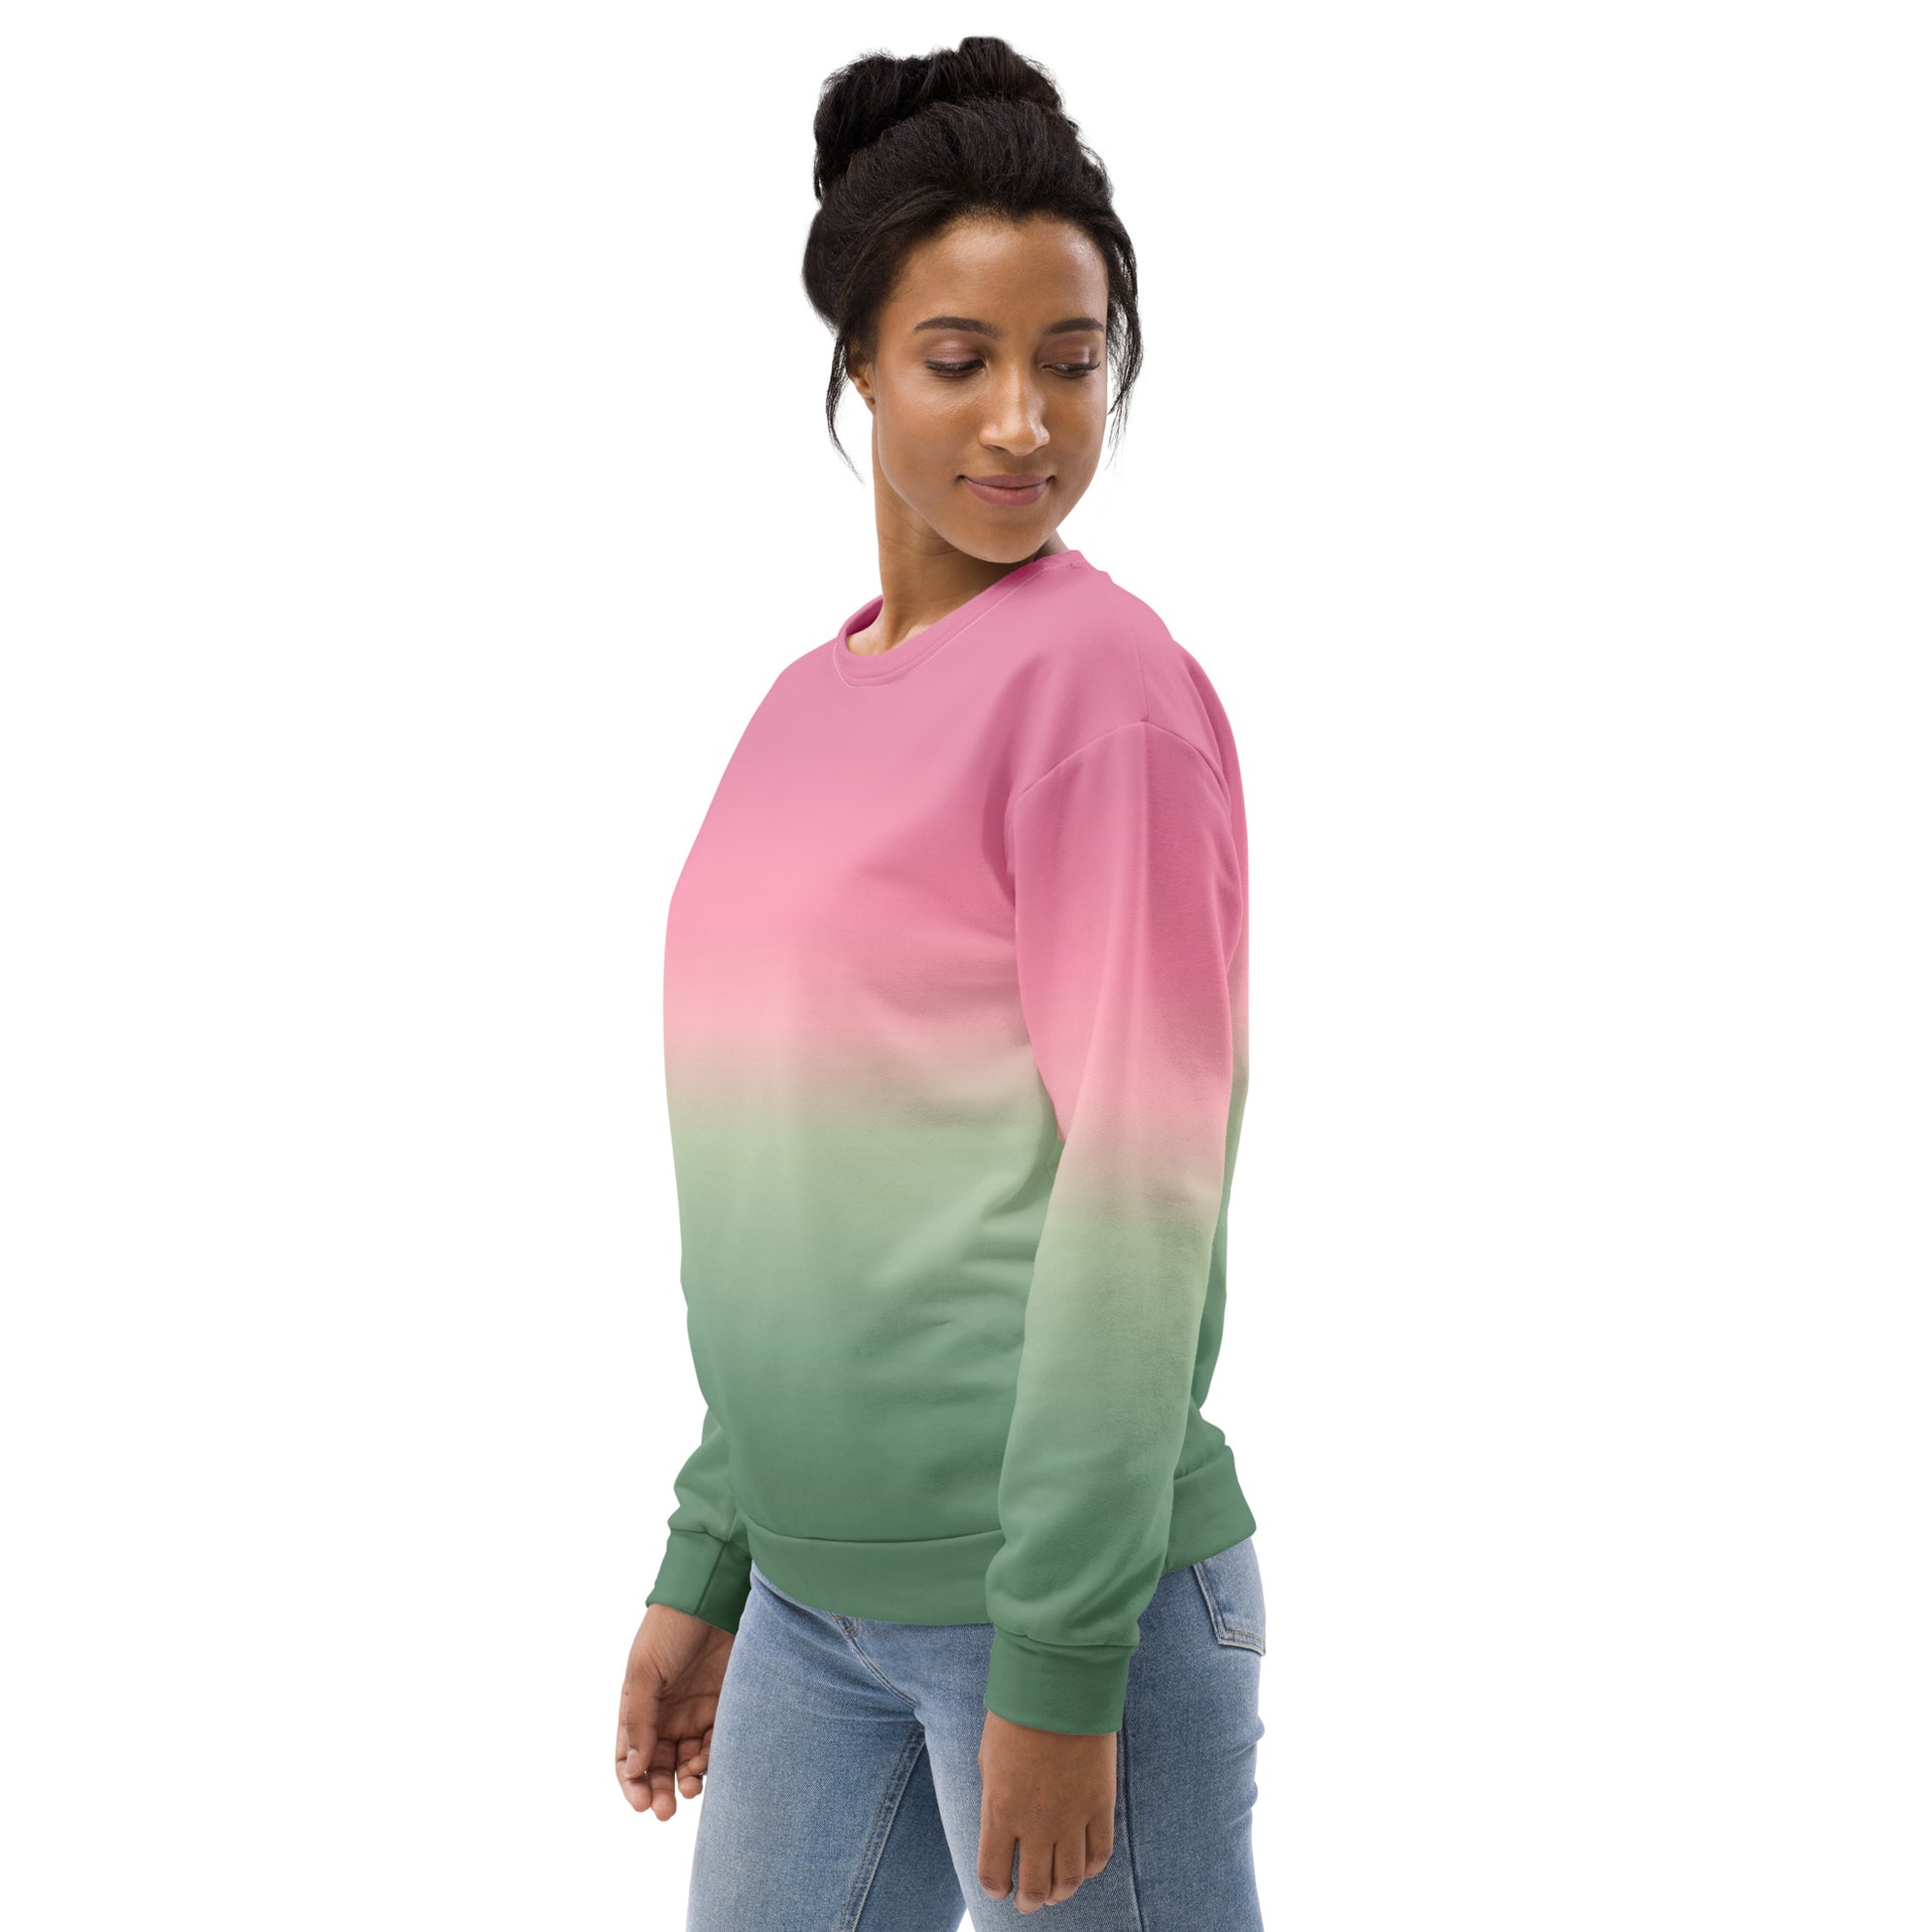 Pink Green Ombre Sweatshirt, Gradient Tie Dye Crewneck Fleece Cotton Sweater Jumper Pullover Men Women Adult Aesthetic Top Starcove Fashion